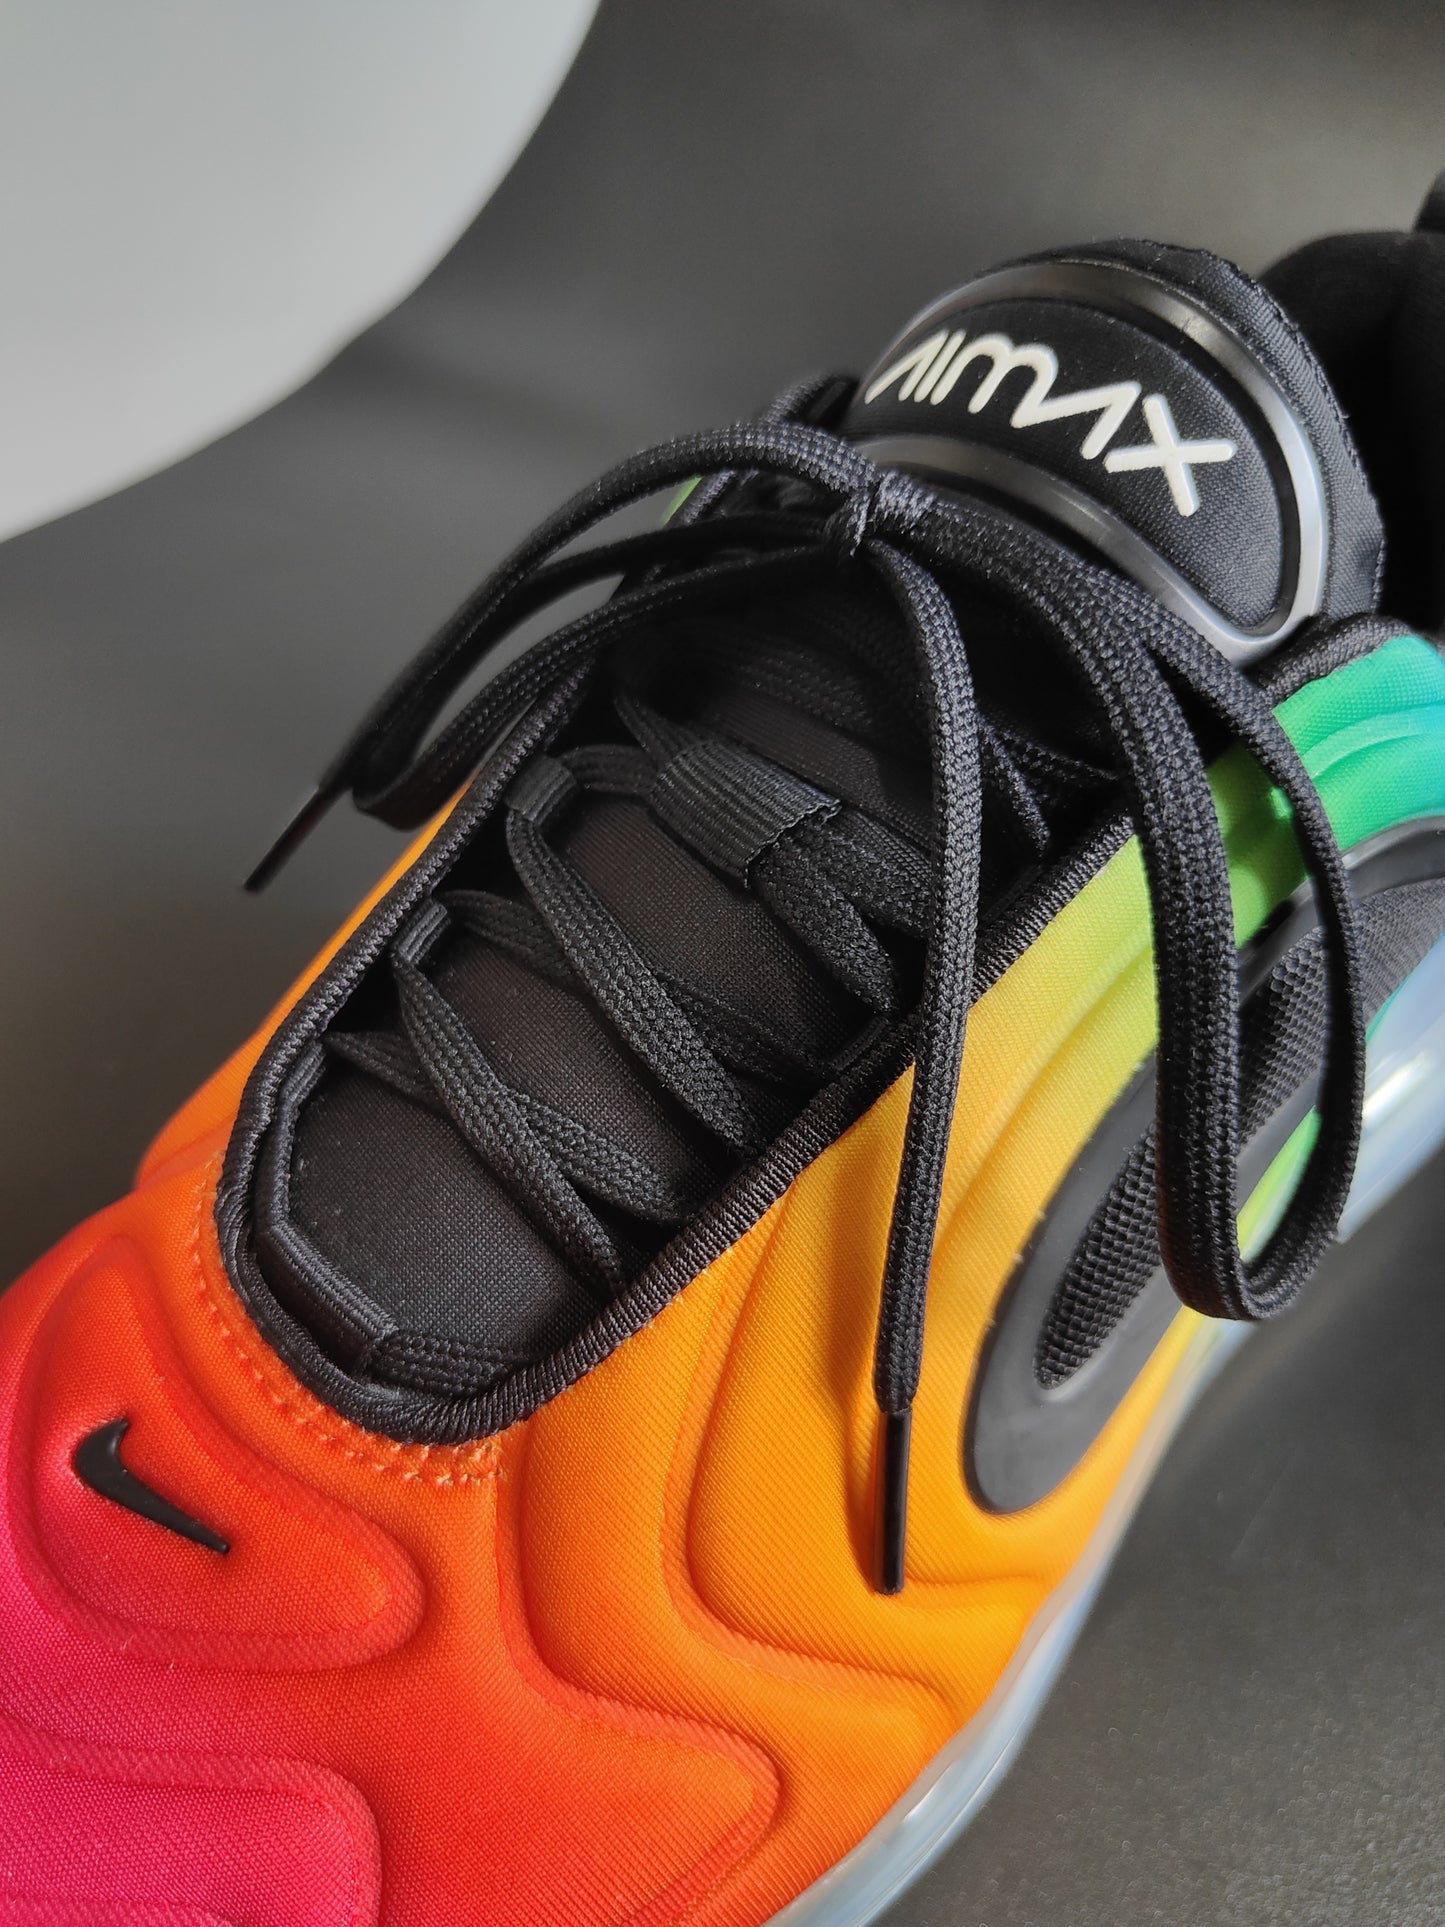 Air Max 720 Be True Sneakers in Rainbow Flag UK 8 / EU 42.5